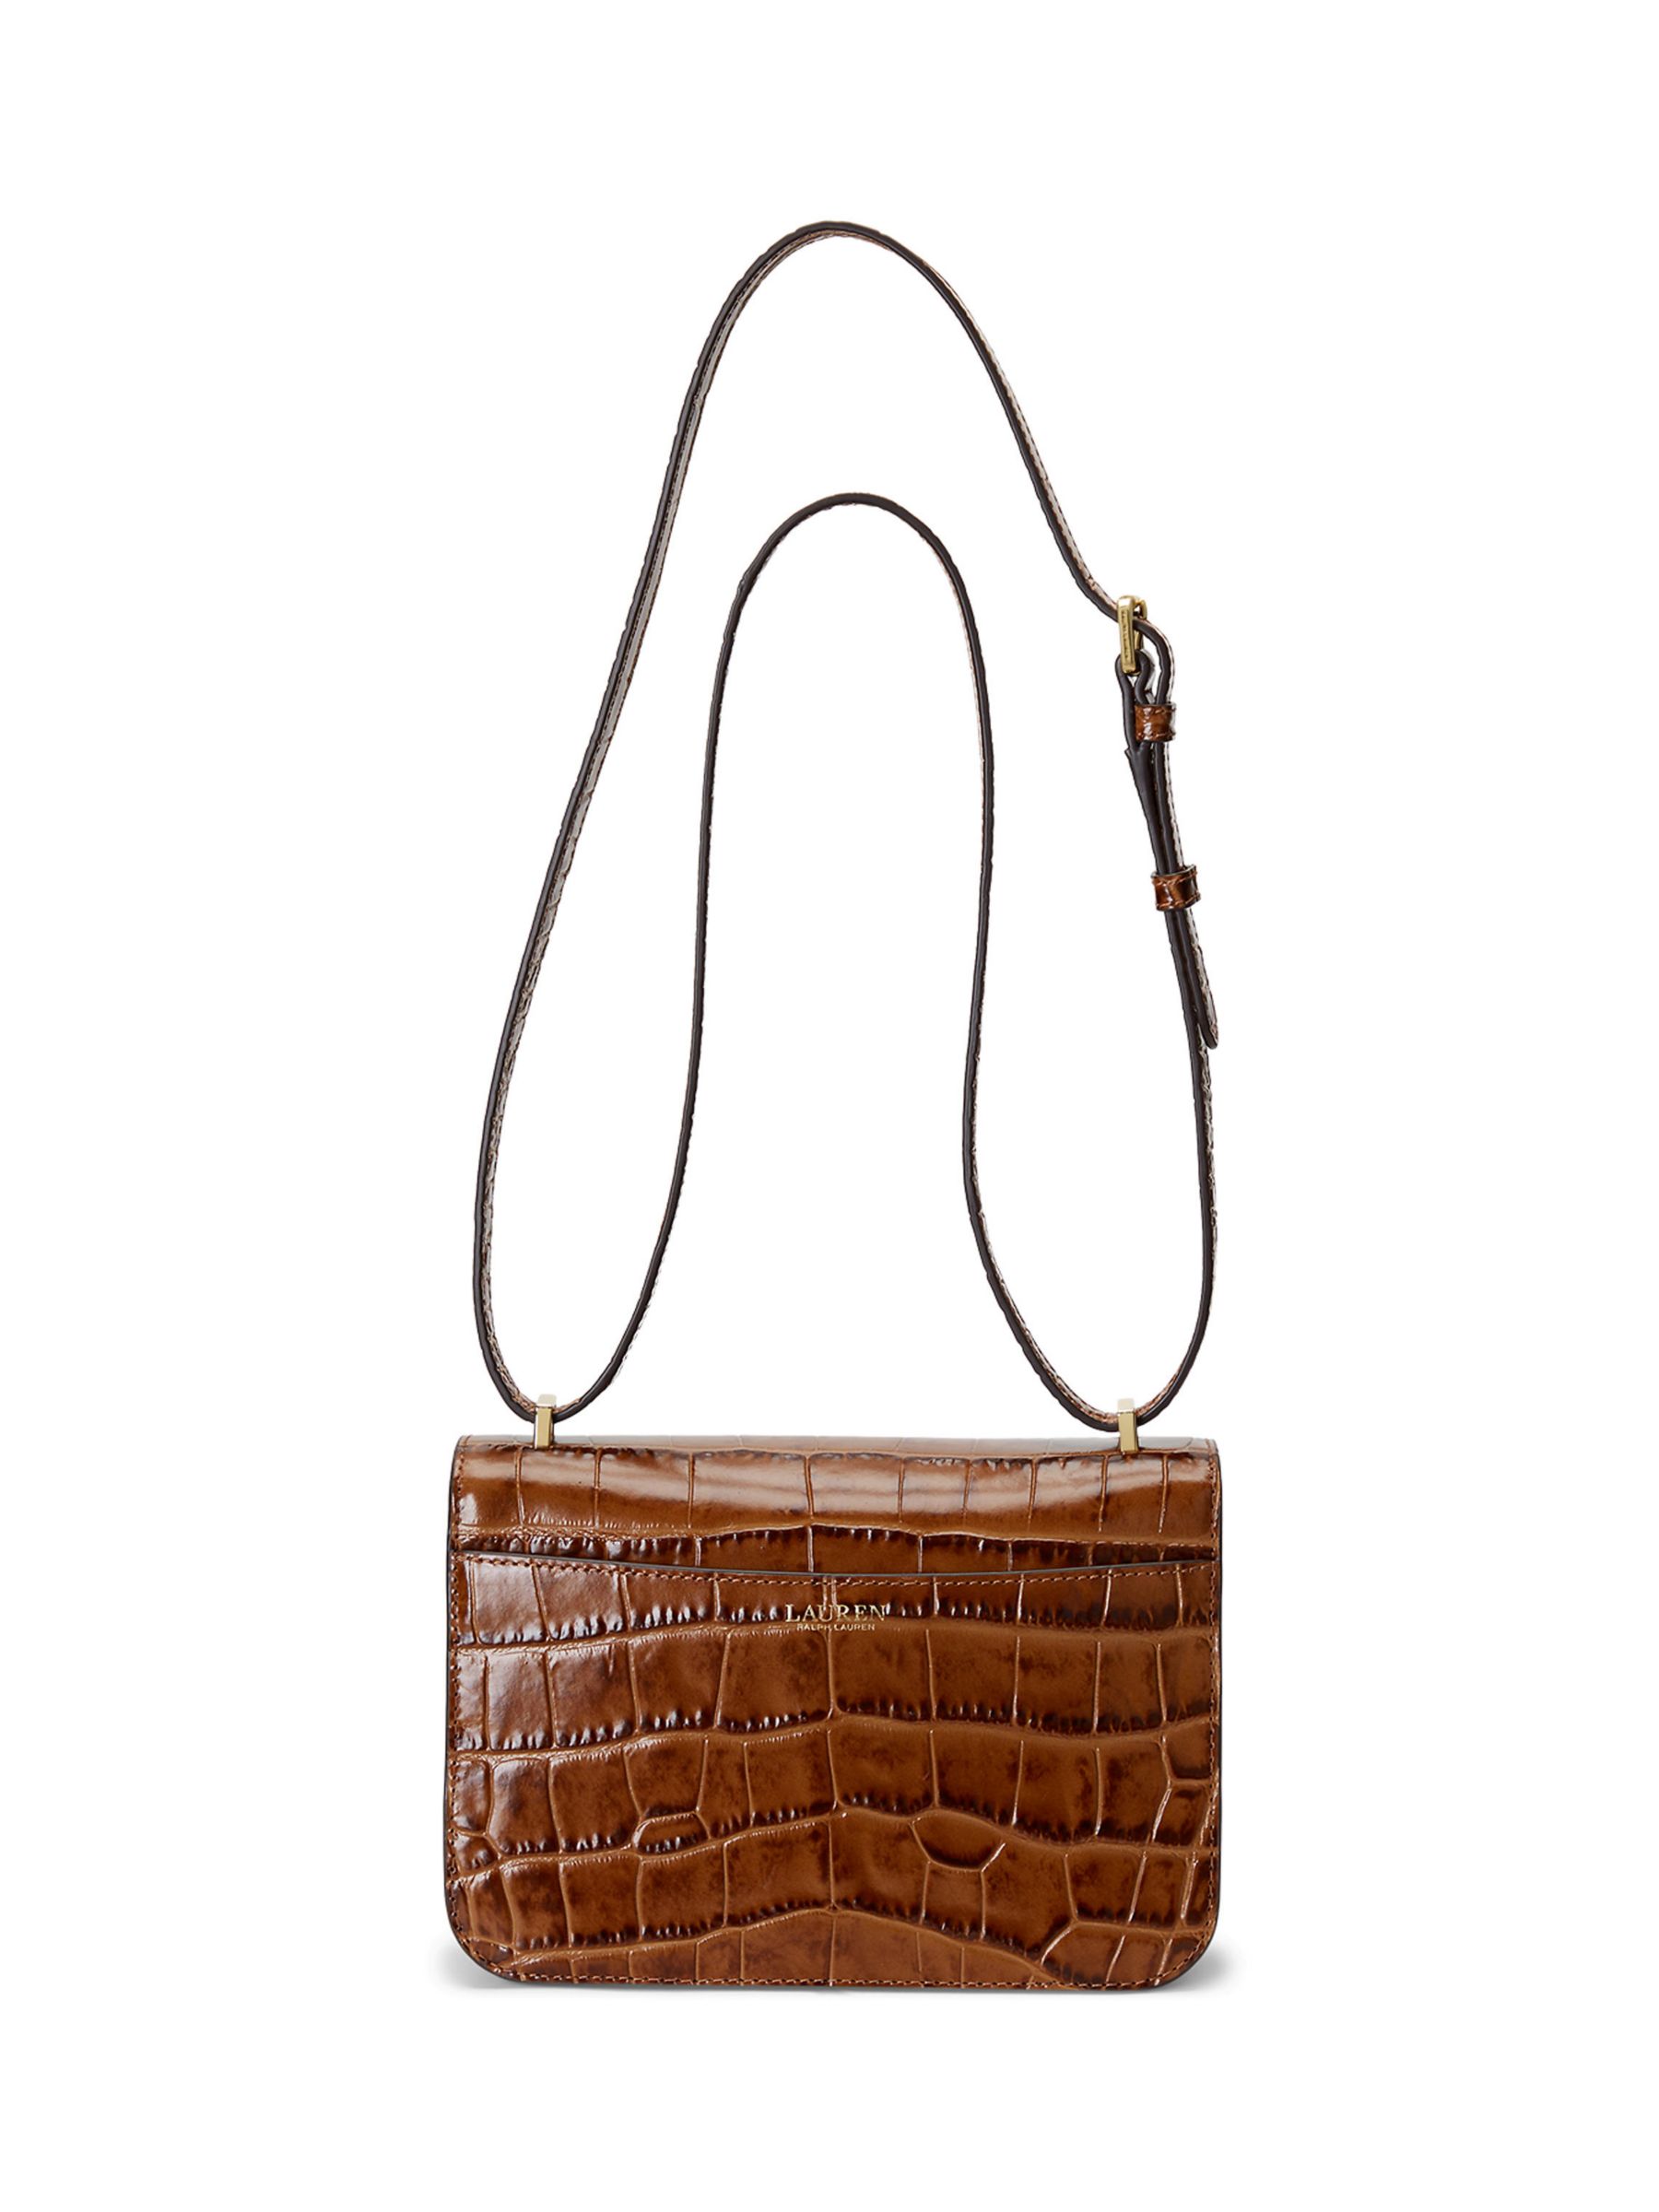 Lauren Ralph Lauren Sophee 22 Embossed Leather Shoulder Bag, Vintage Brown